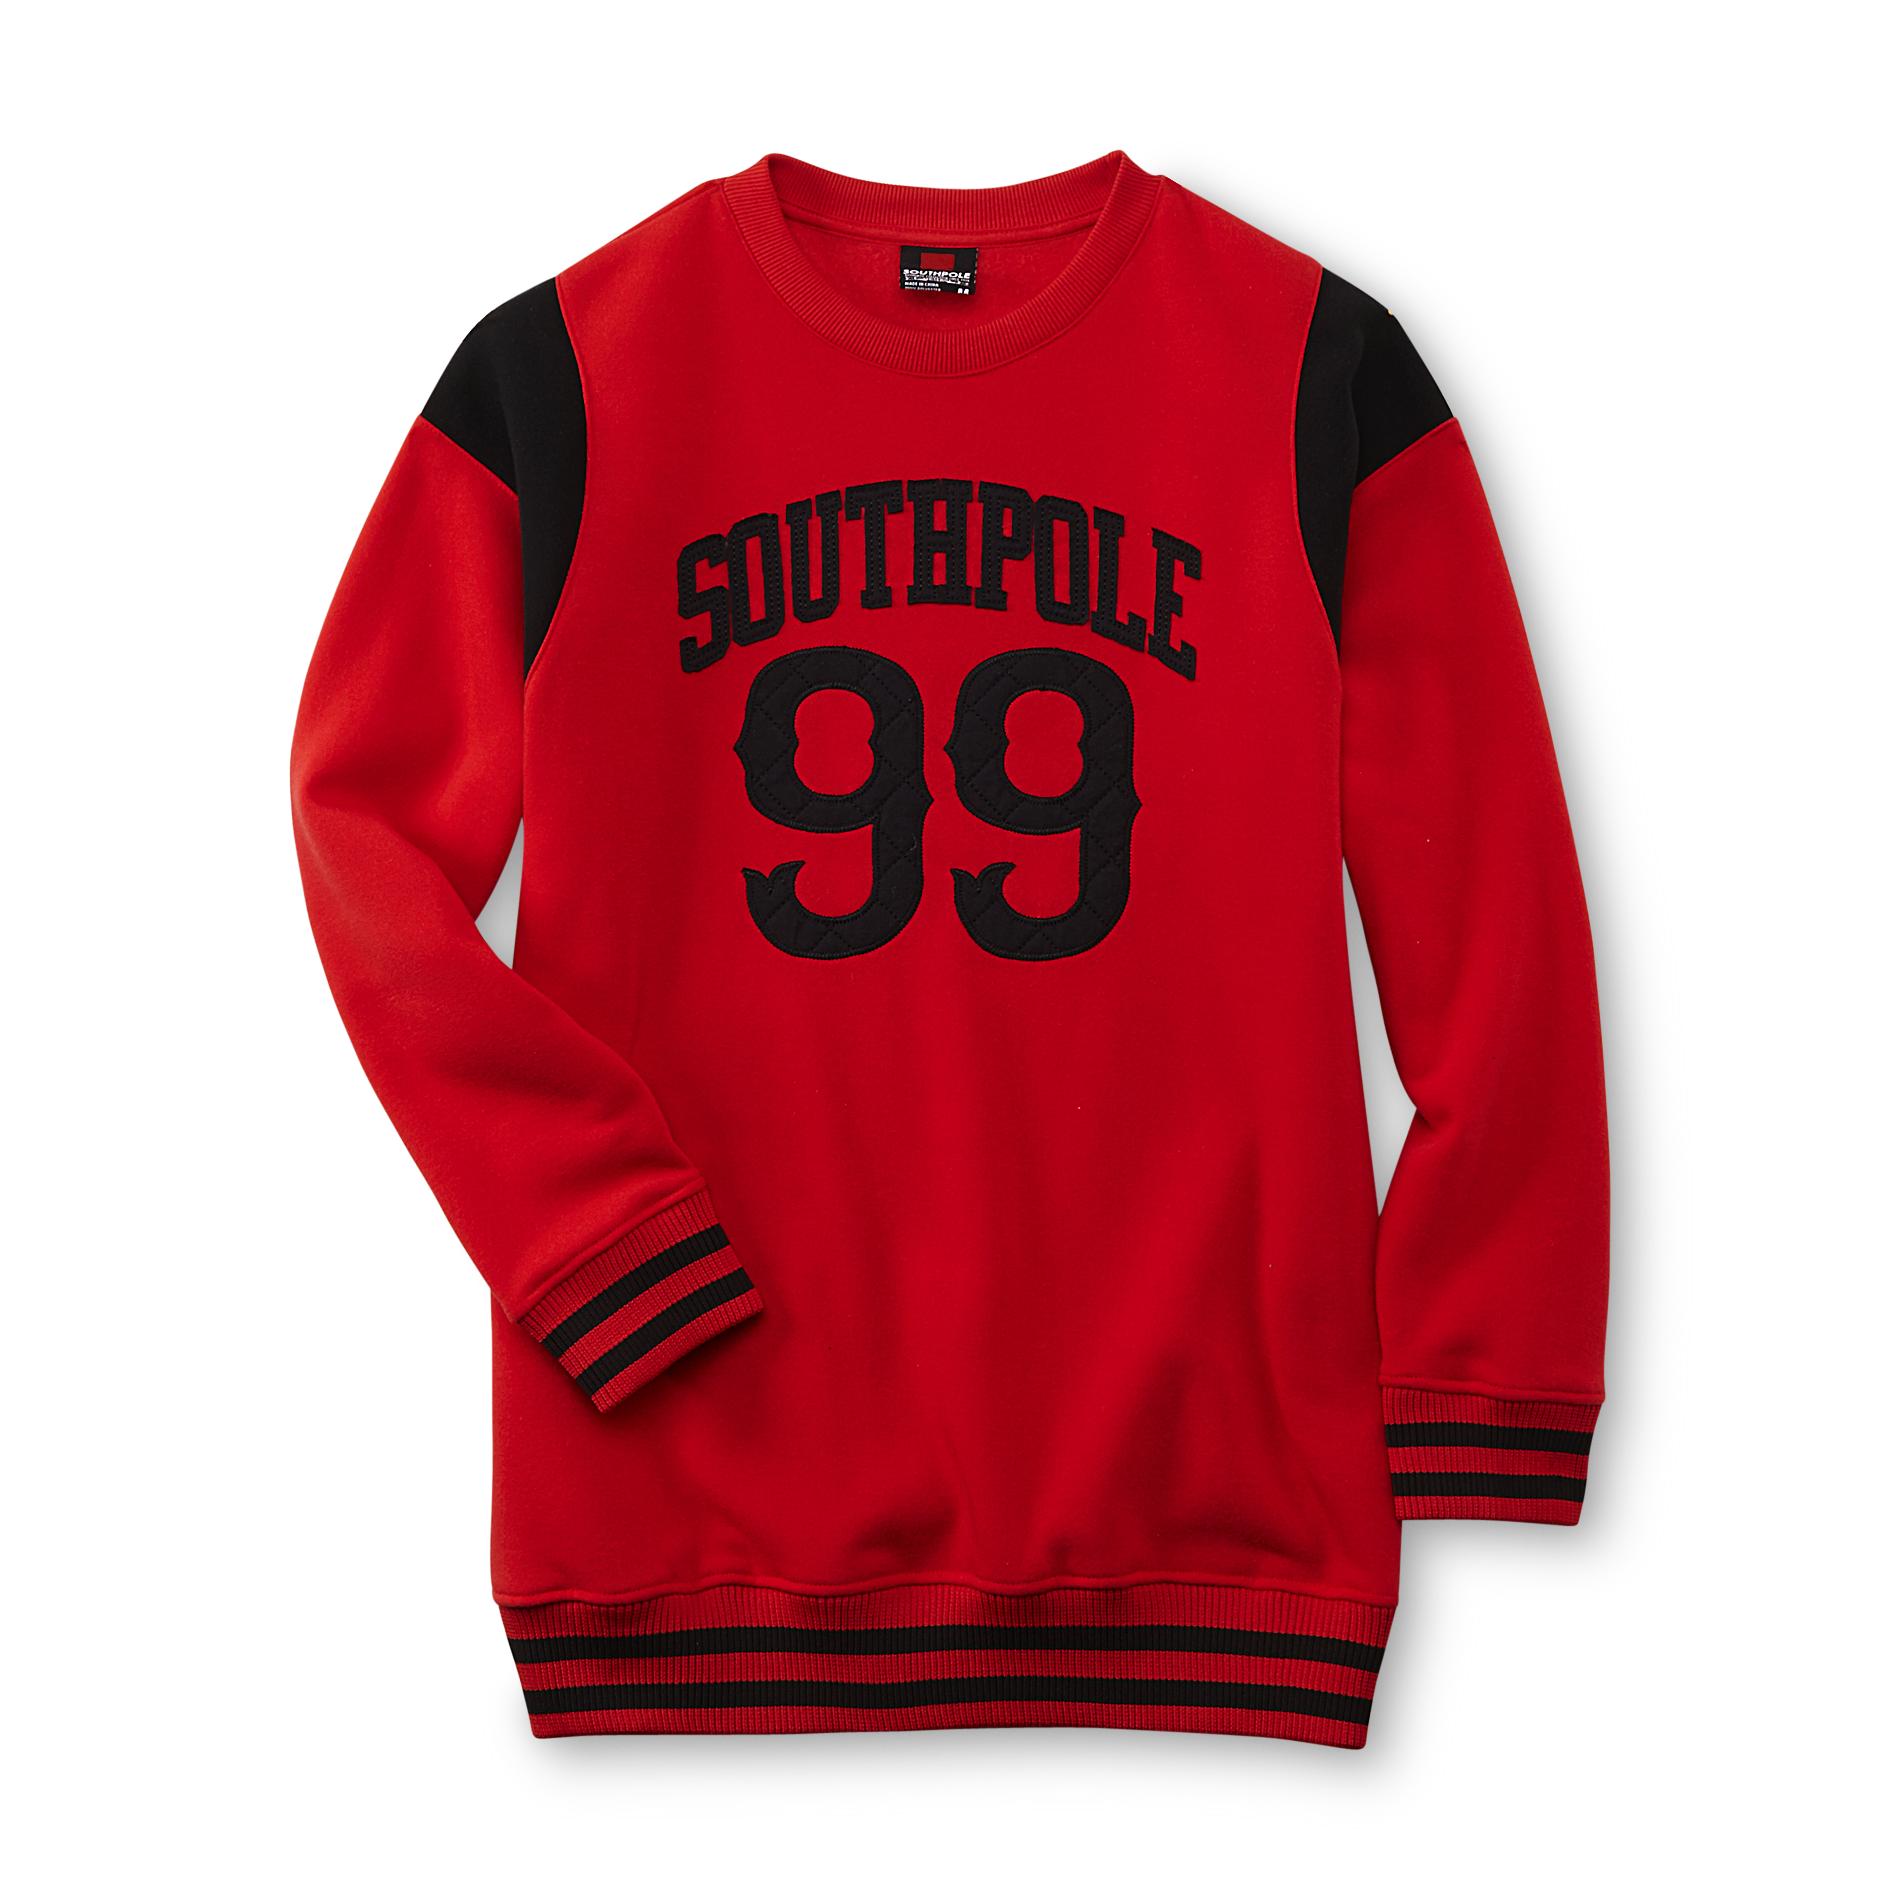 Southpole Young Men's Sweatshirt - 99